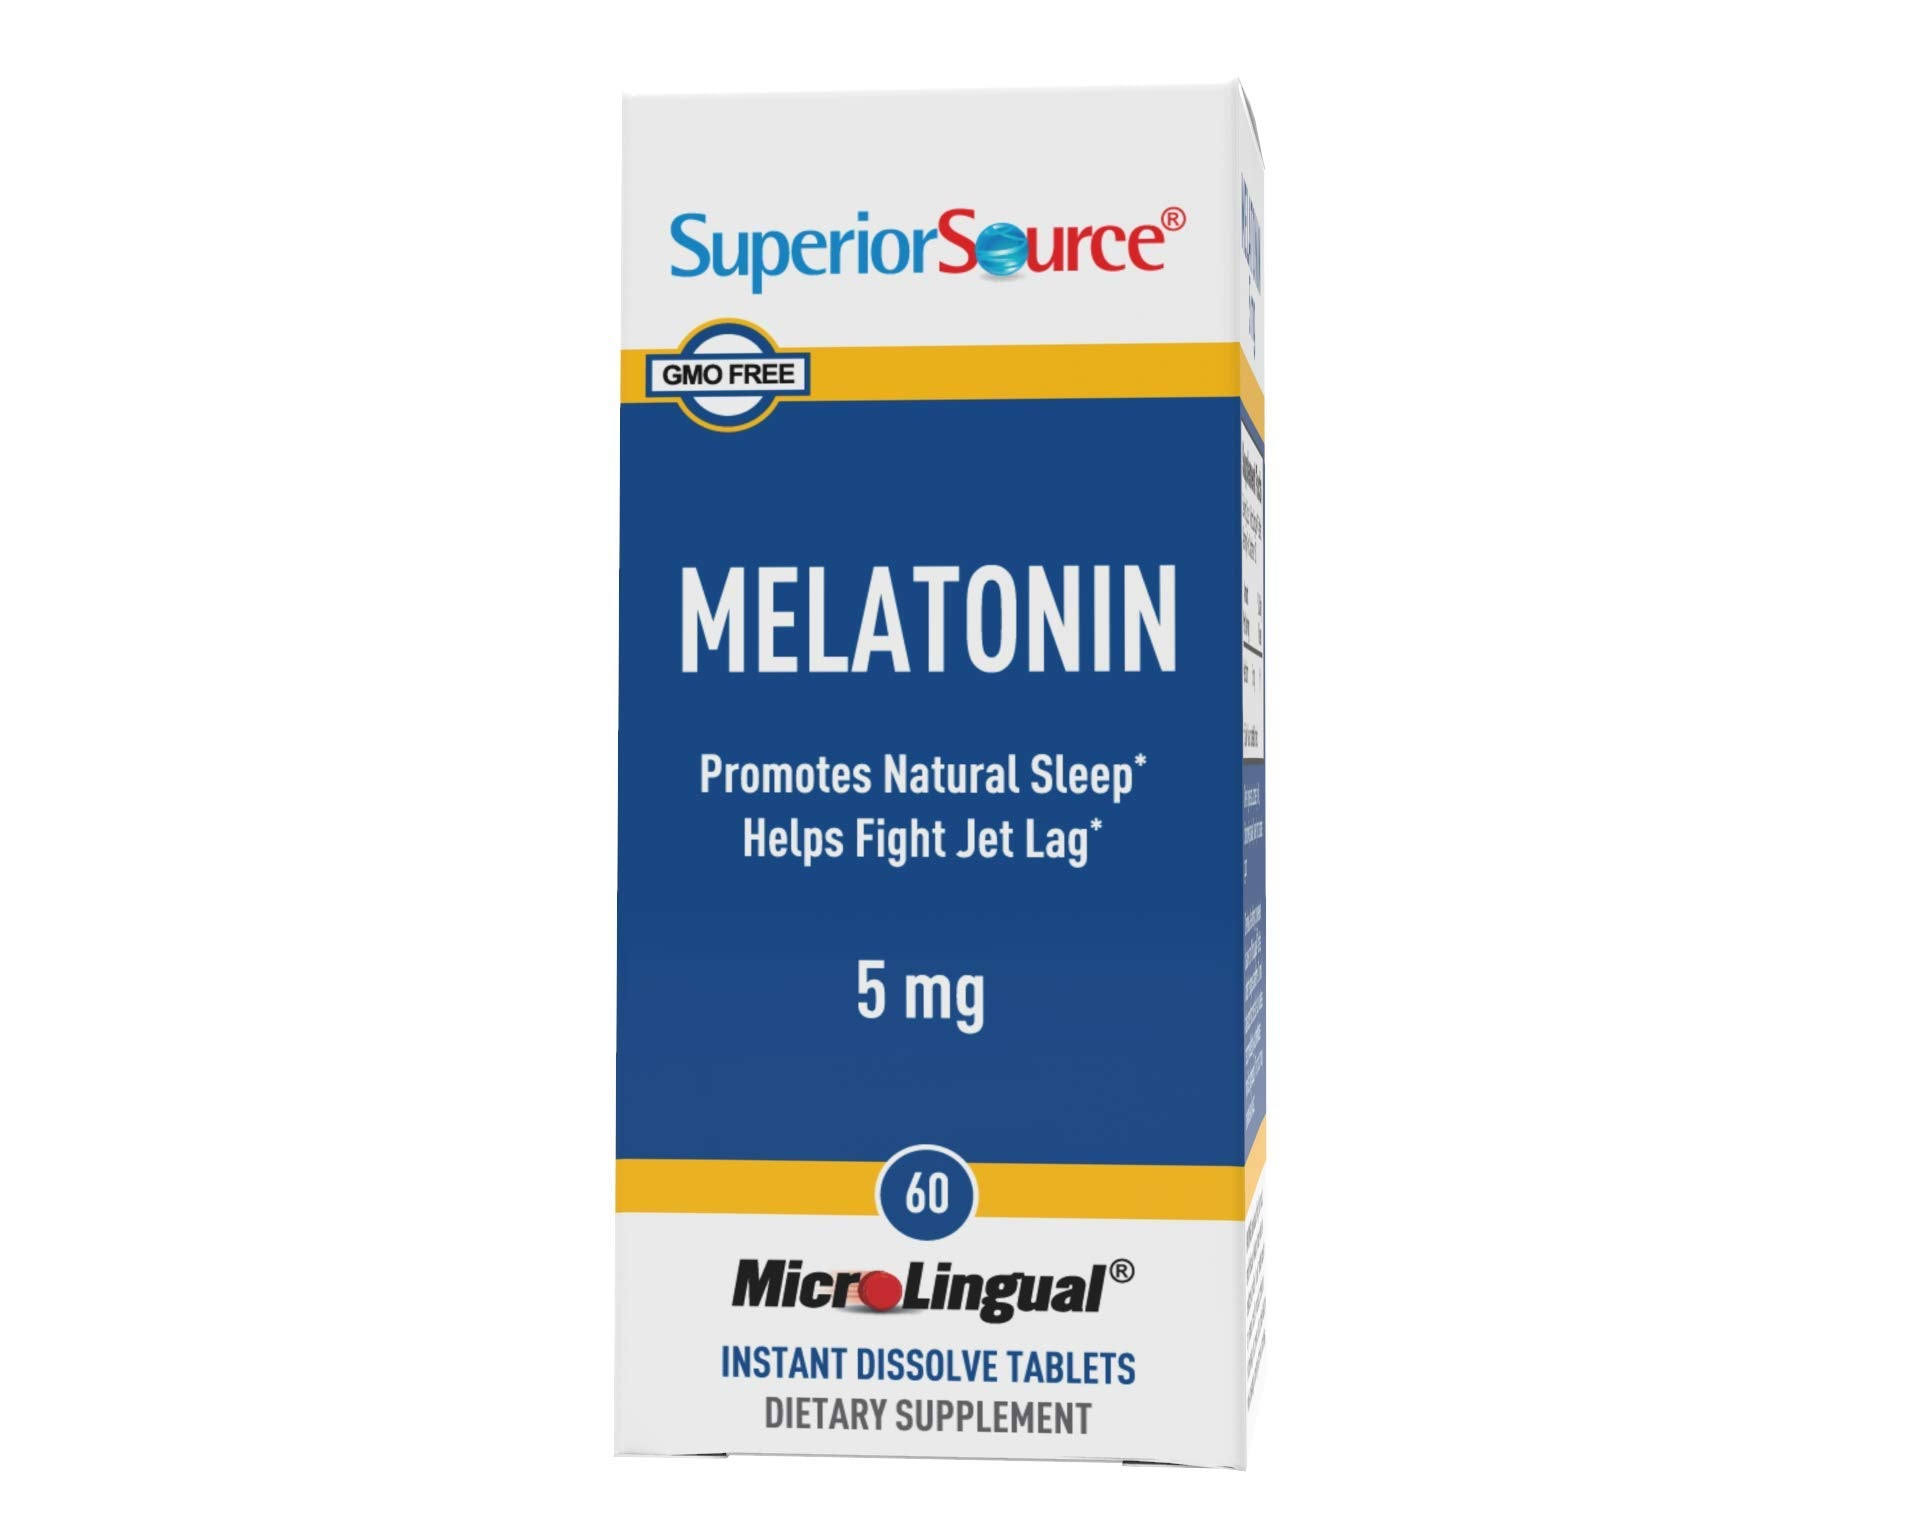 Superior Source Melatonin Supplement - 60 Tablets